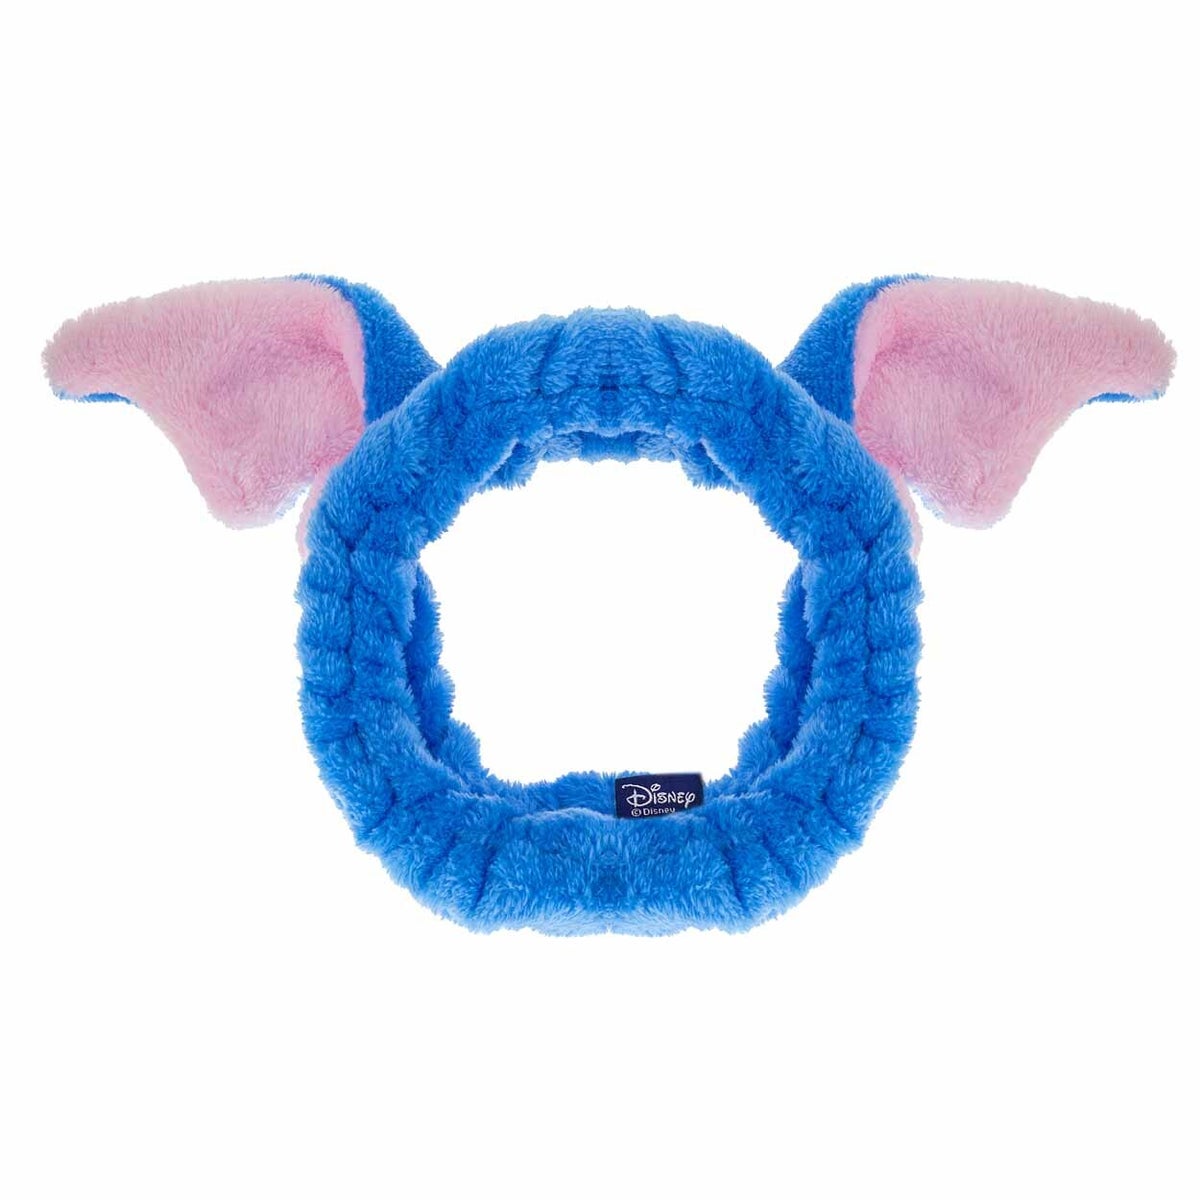 Disney Stitch Denim - Headband